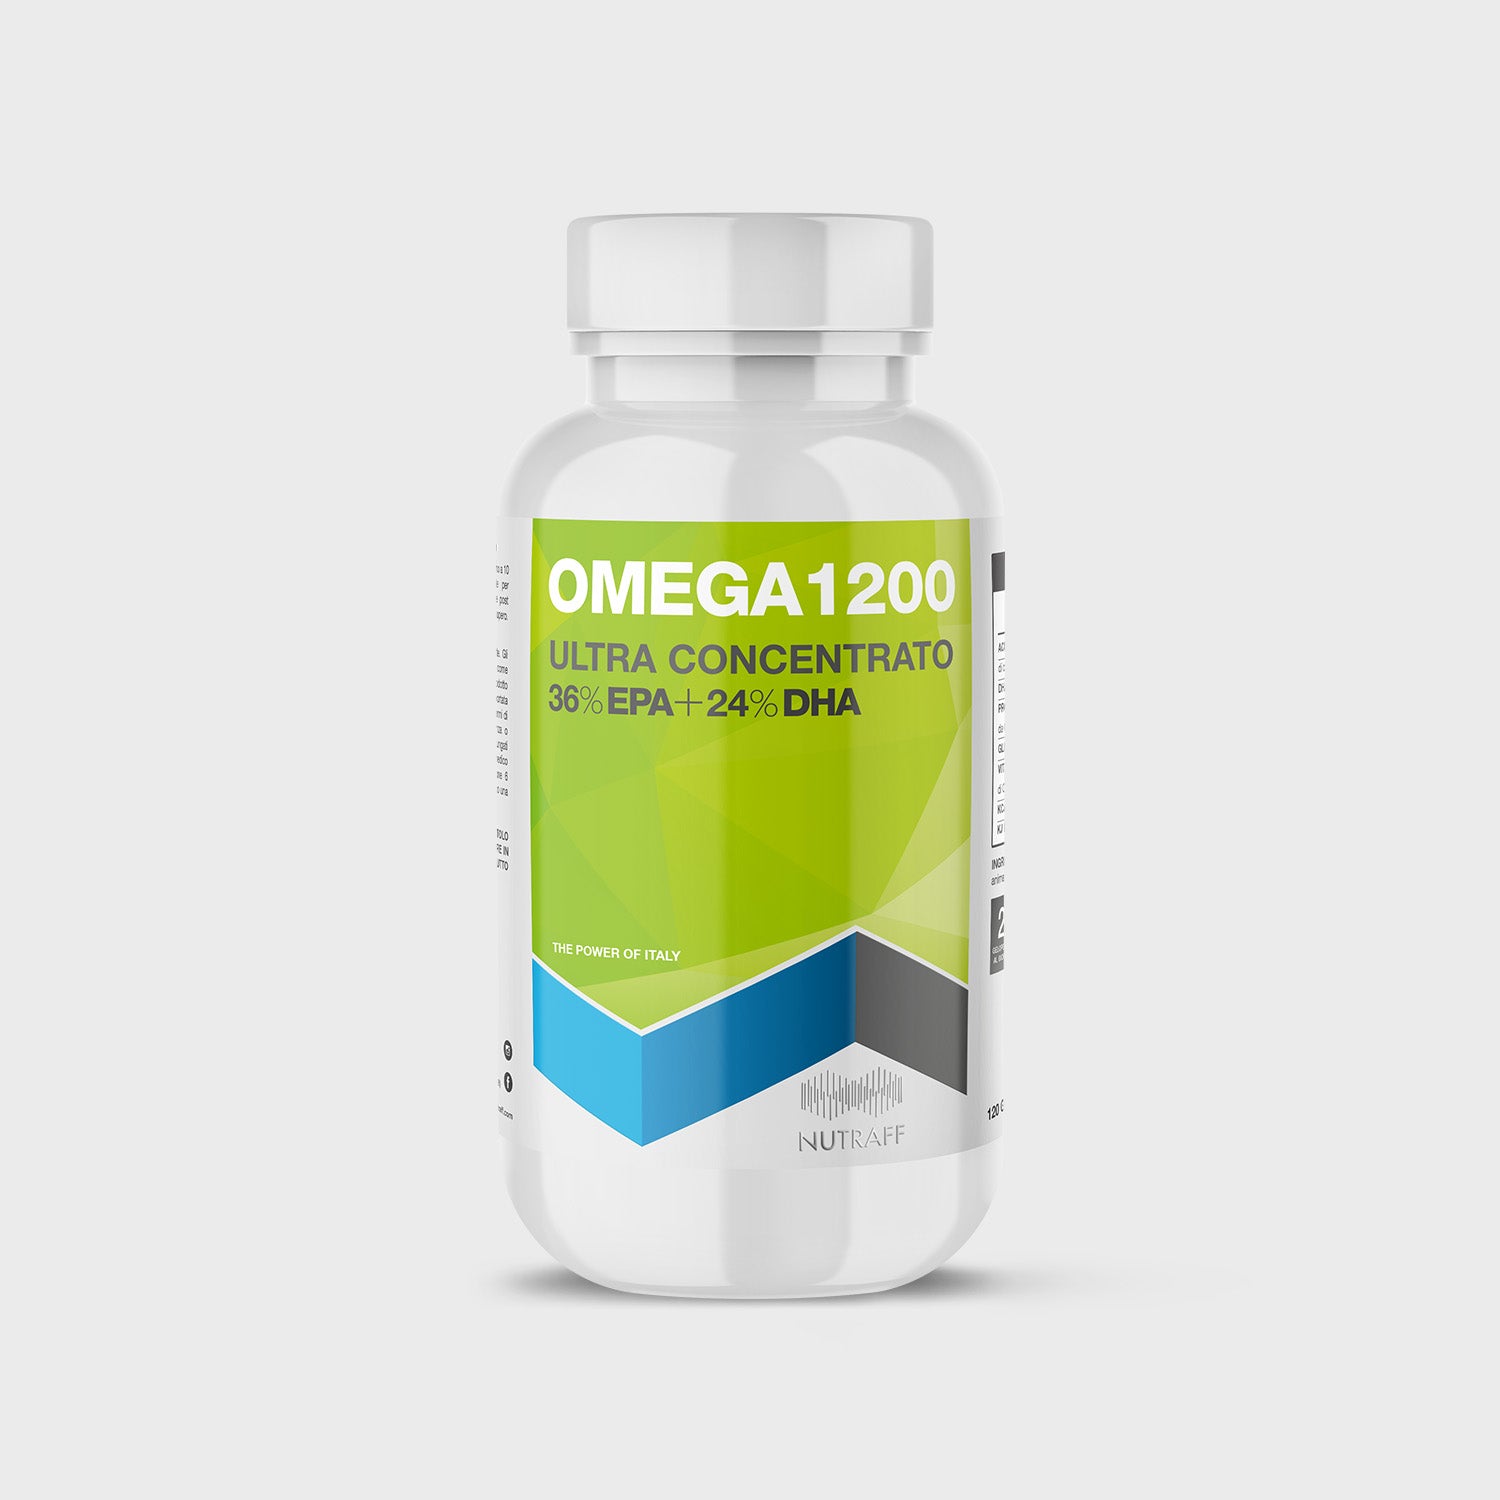 omega1200 omega3 nutraff